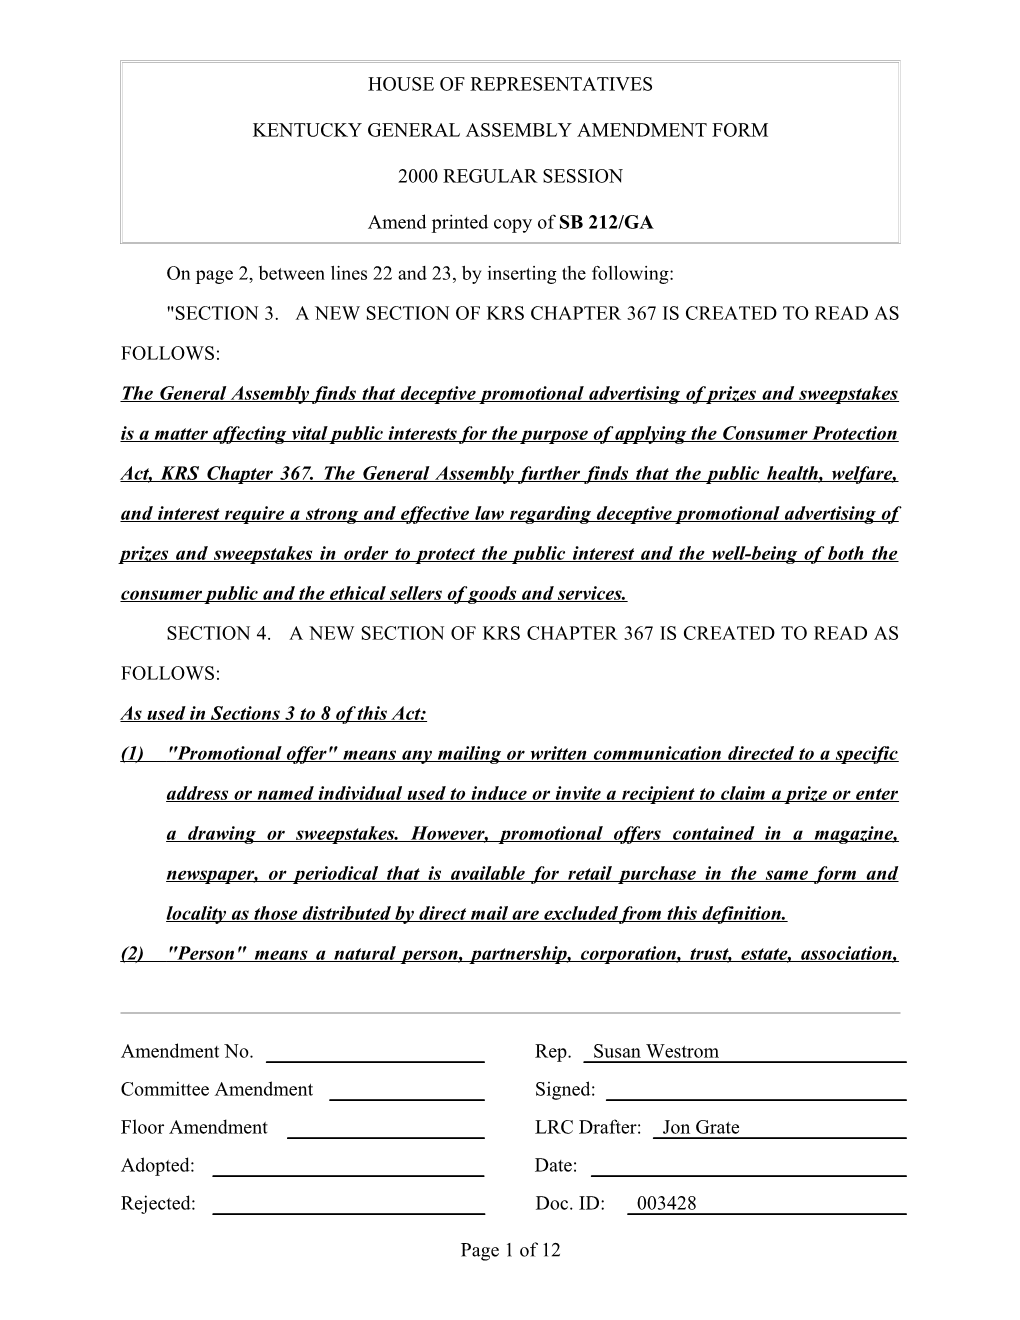 Kentucky General Assembly Amendment Form s12